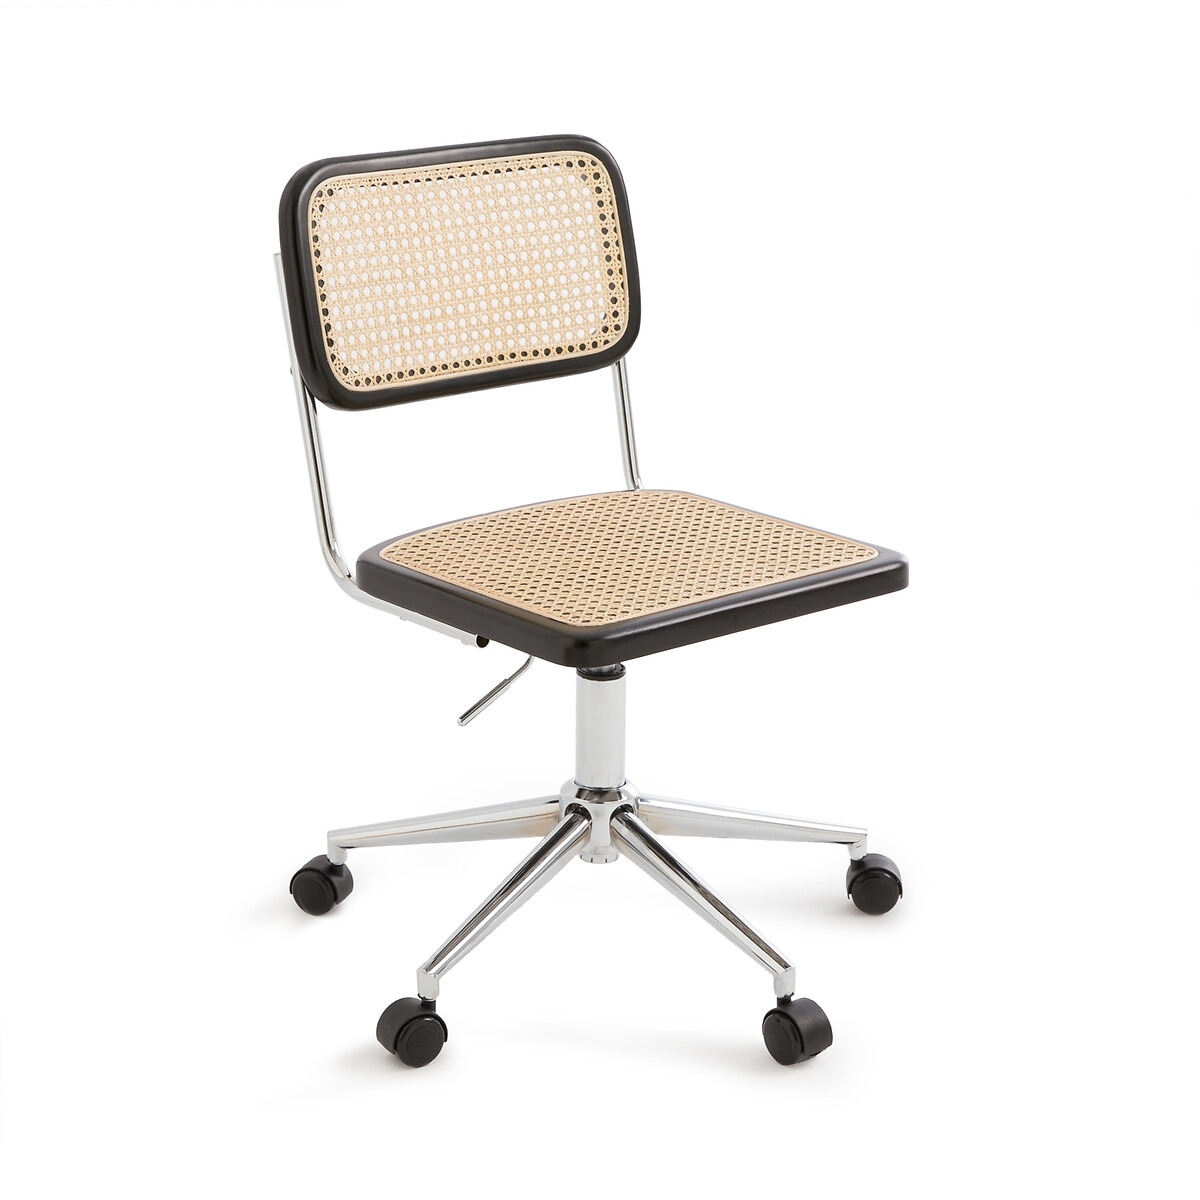 Cedak Cane Portable Office Chair - image 1